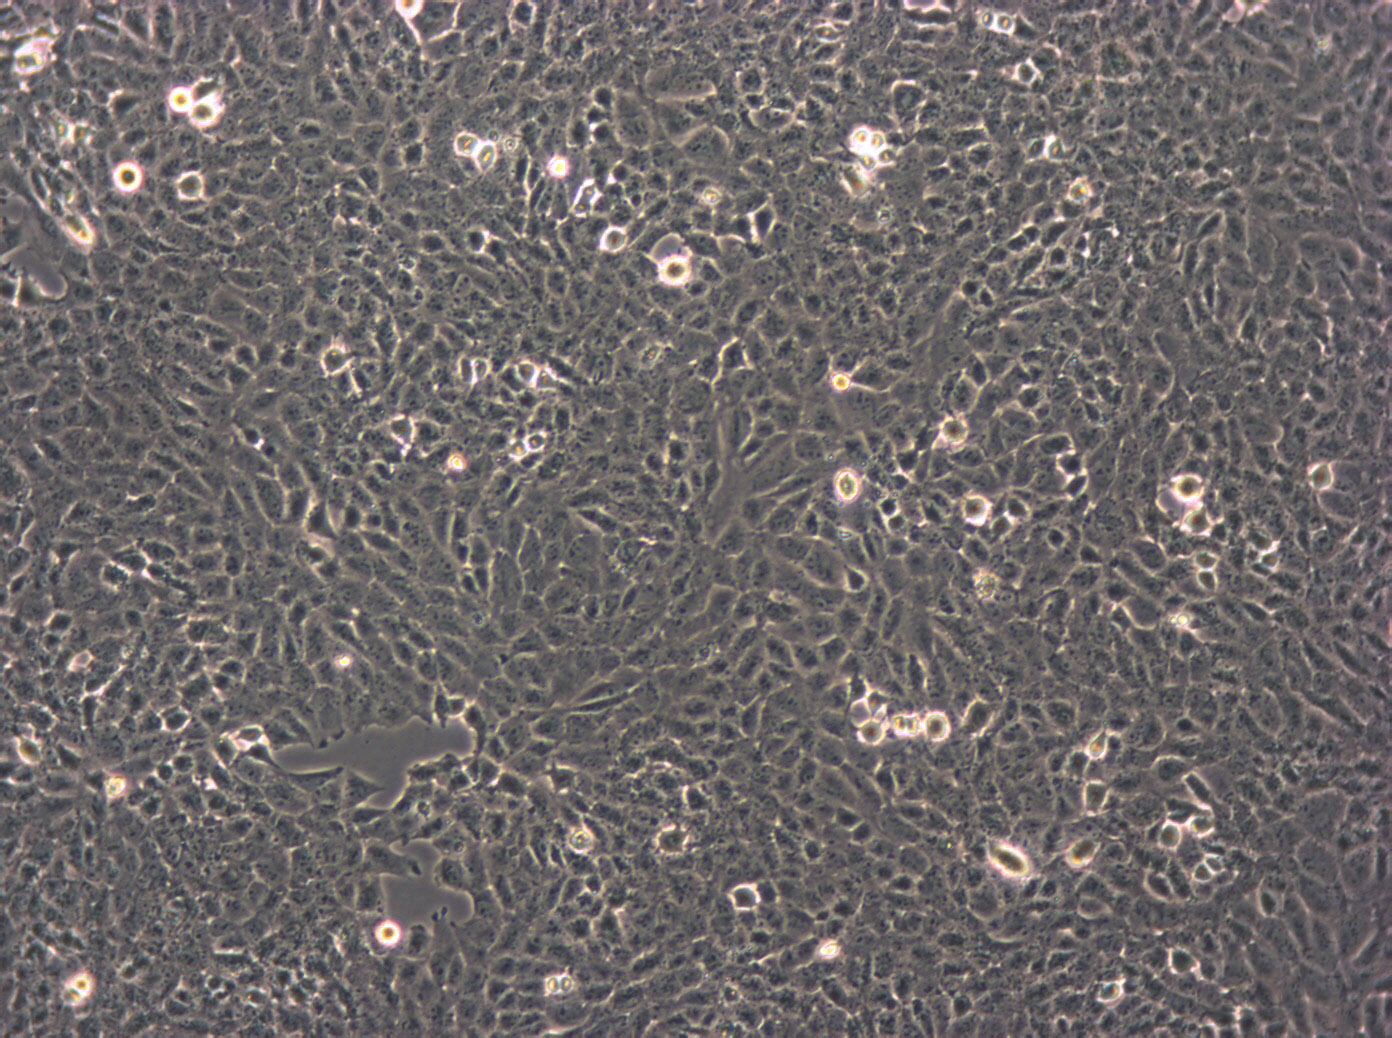 PC-3 Cell|人前列腺癌细胞